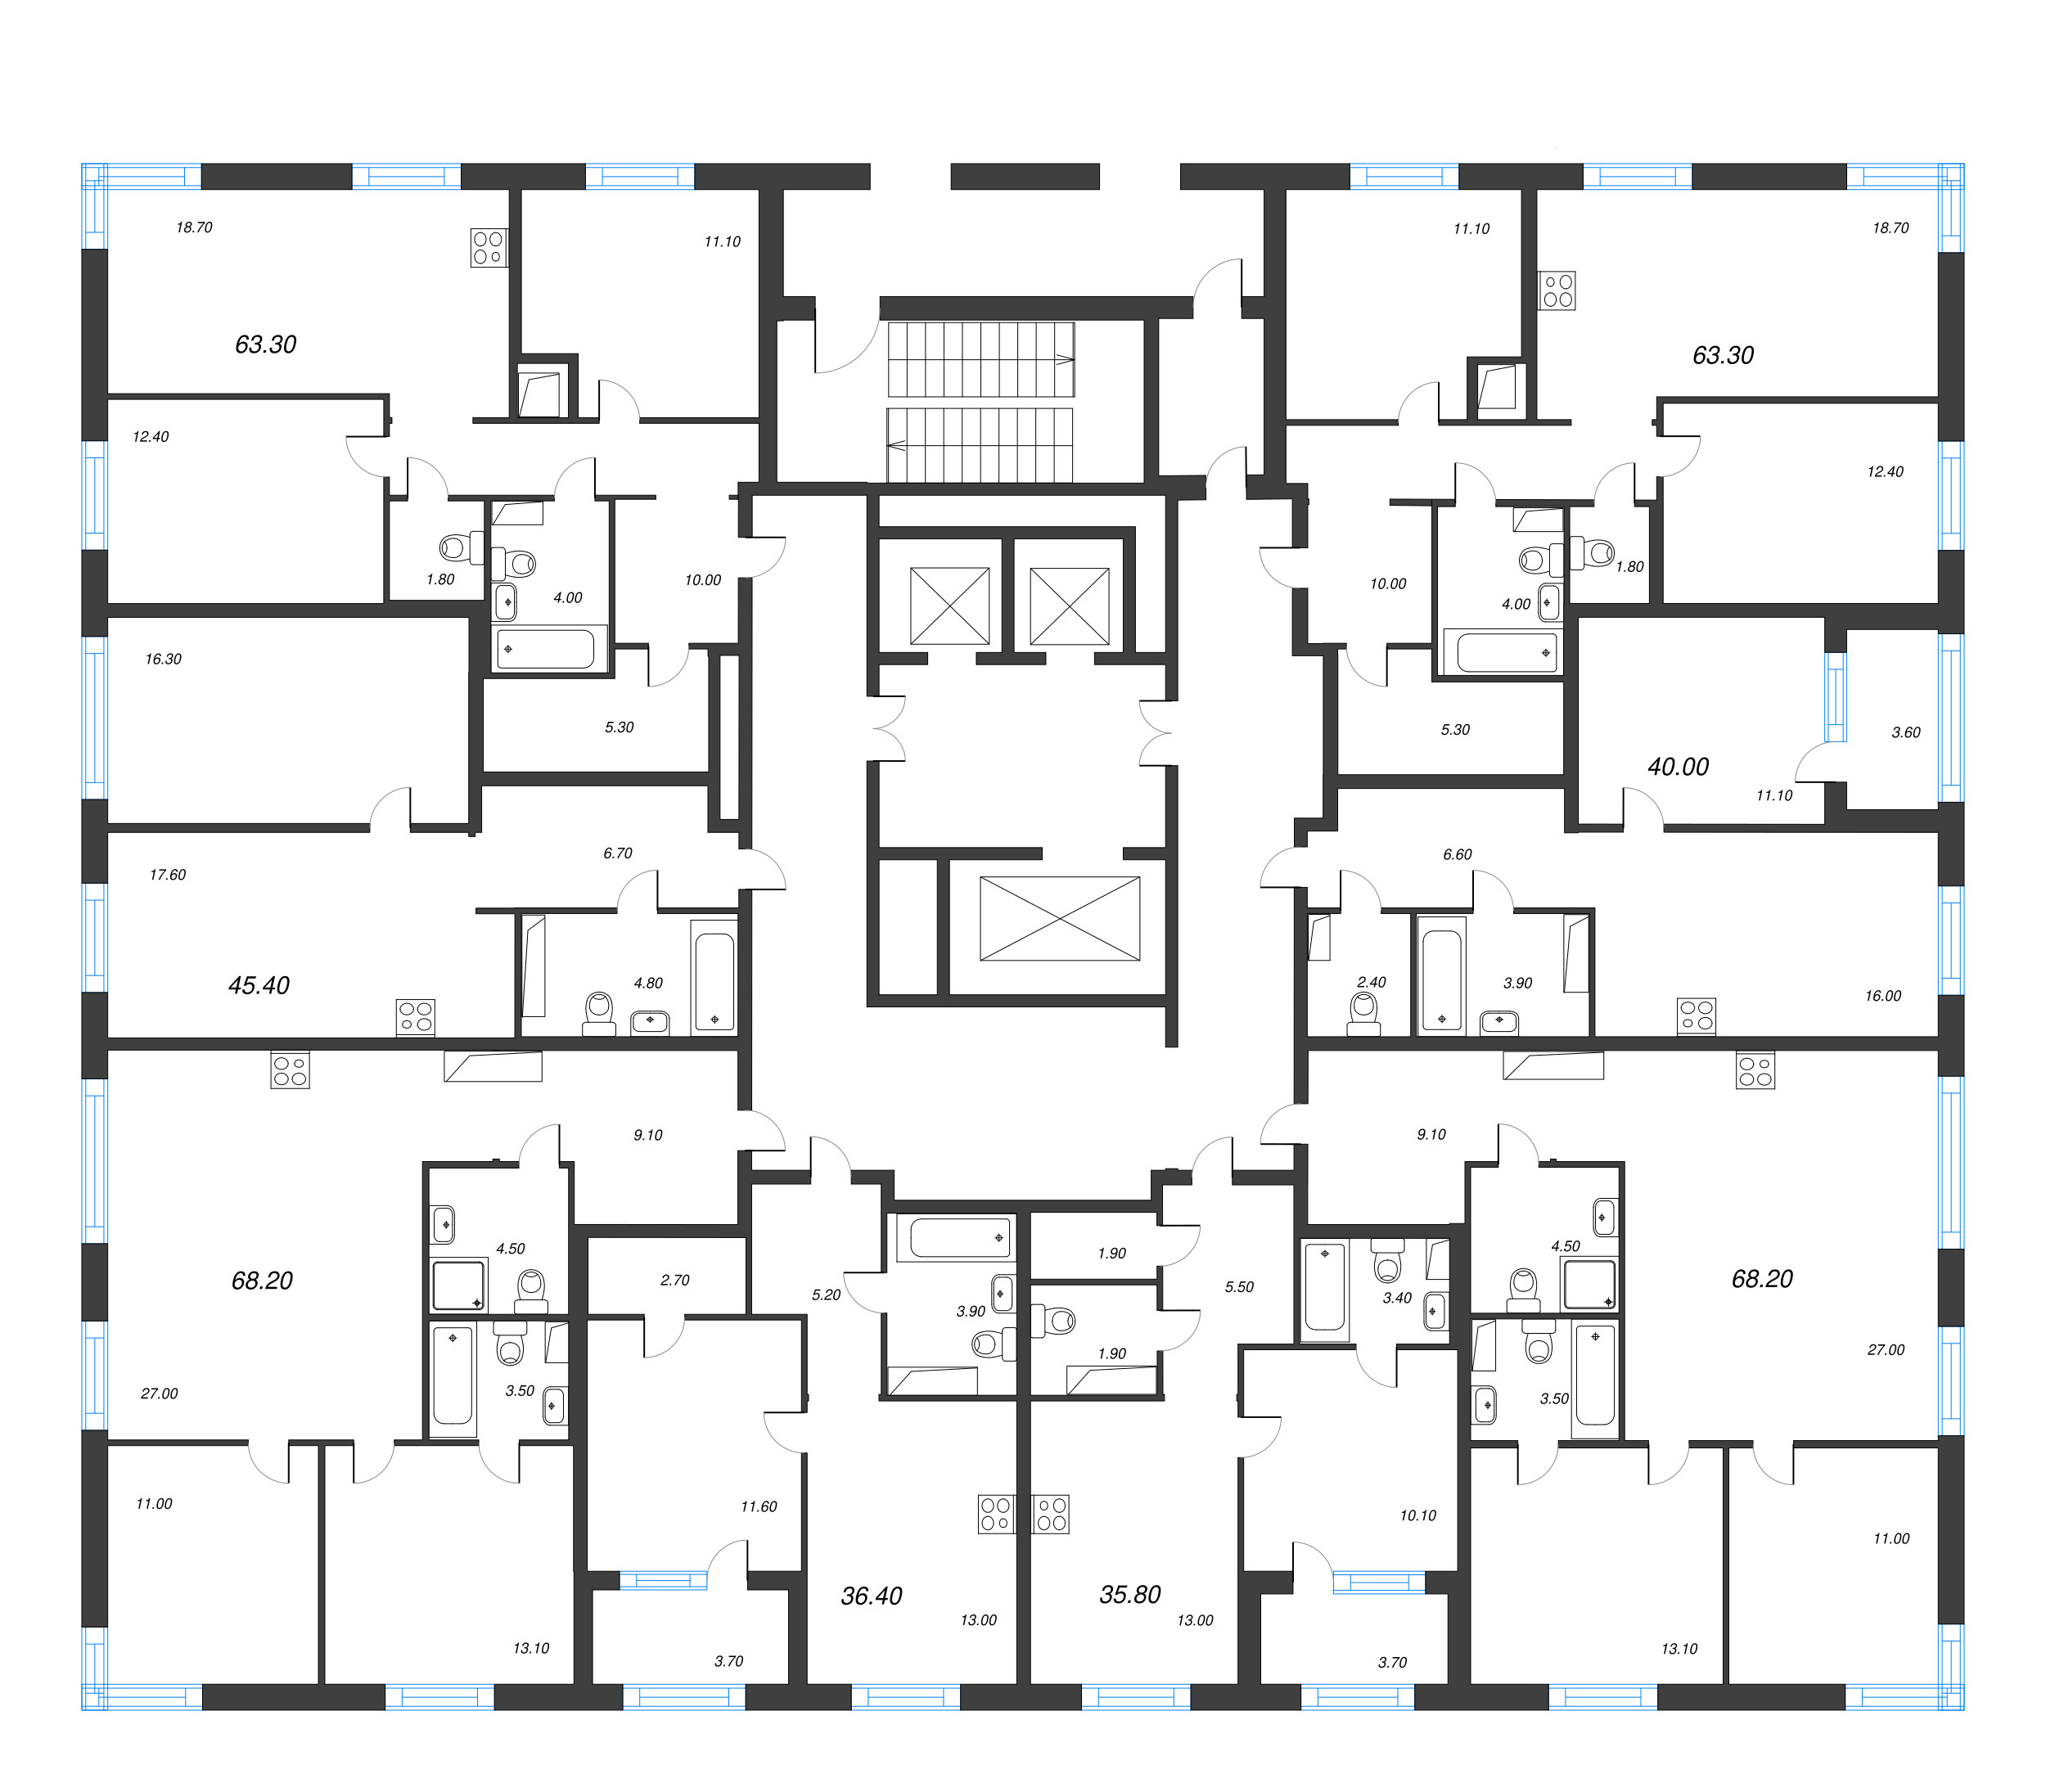 3-комнатная (Евро) квартира, 63.3 м² - планировка этажа